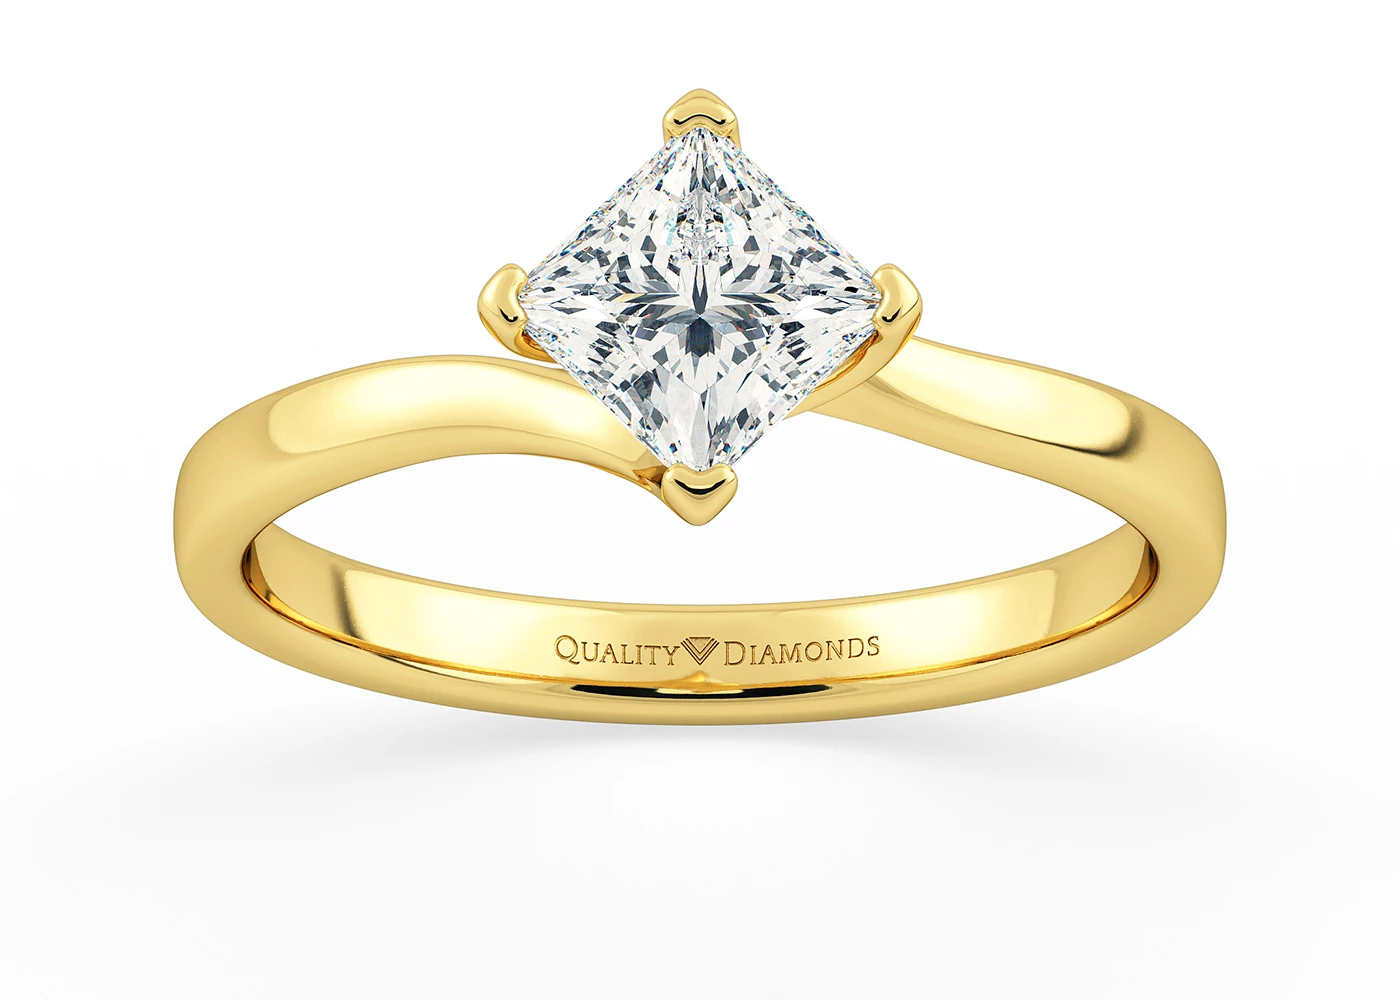 Princess Cura Diamond Ring in 9K Yellow Gold